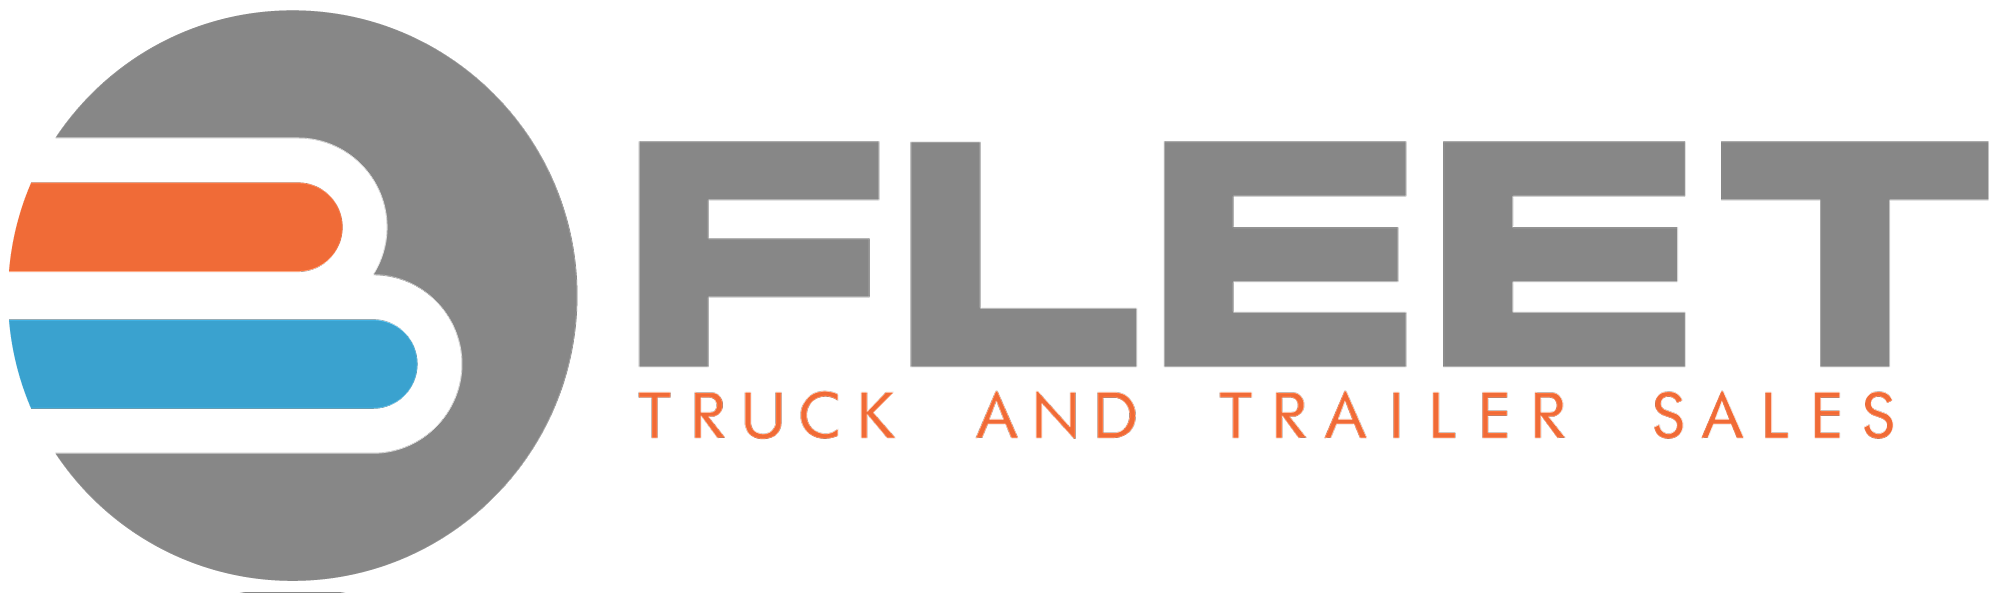 Fleet Truck and trailer sales fleet-logo-1 Home page  